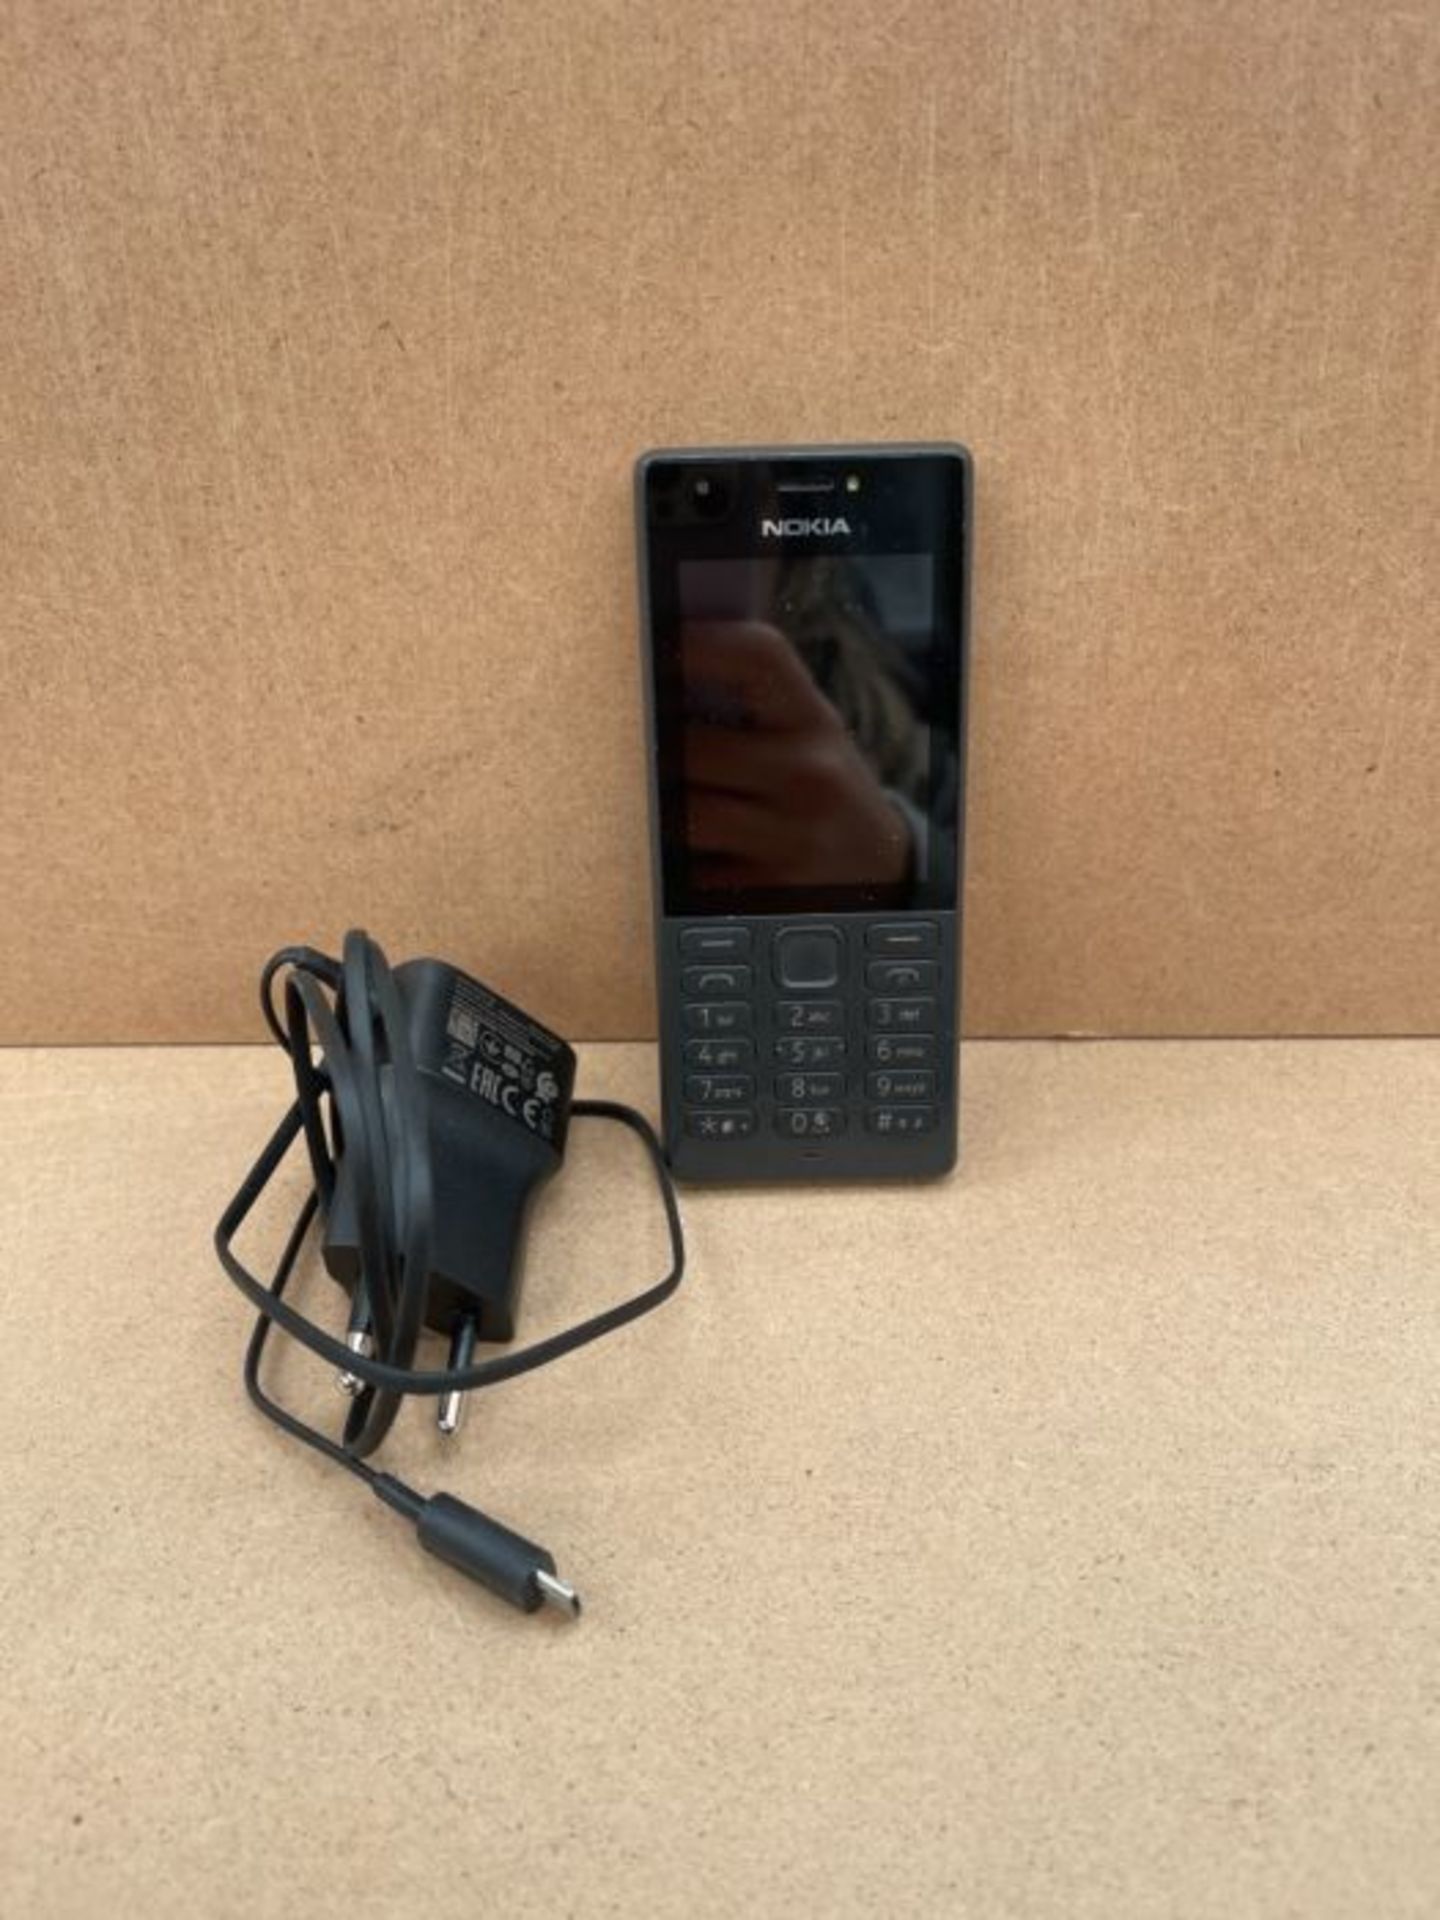 Nokia 216 Dual Sim Phone Case, 16 MB Internal Memory, Black - Guarantee Italy - Image 3 of 3